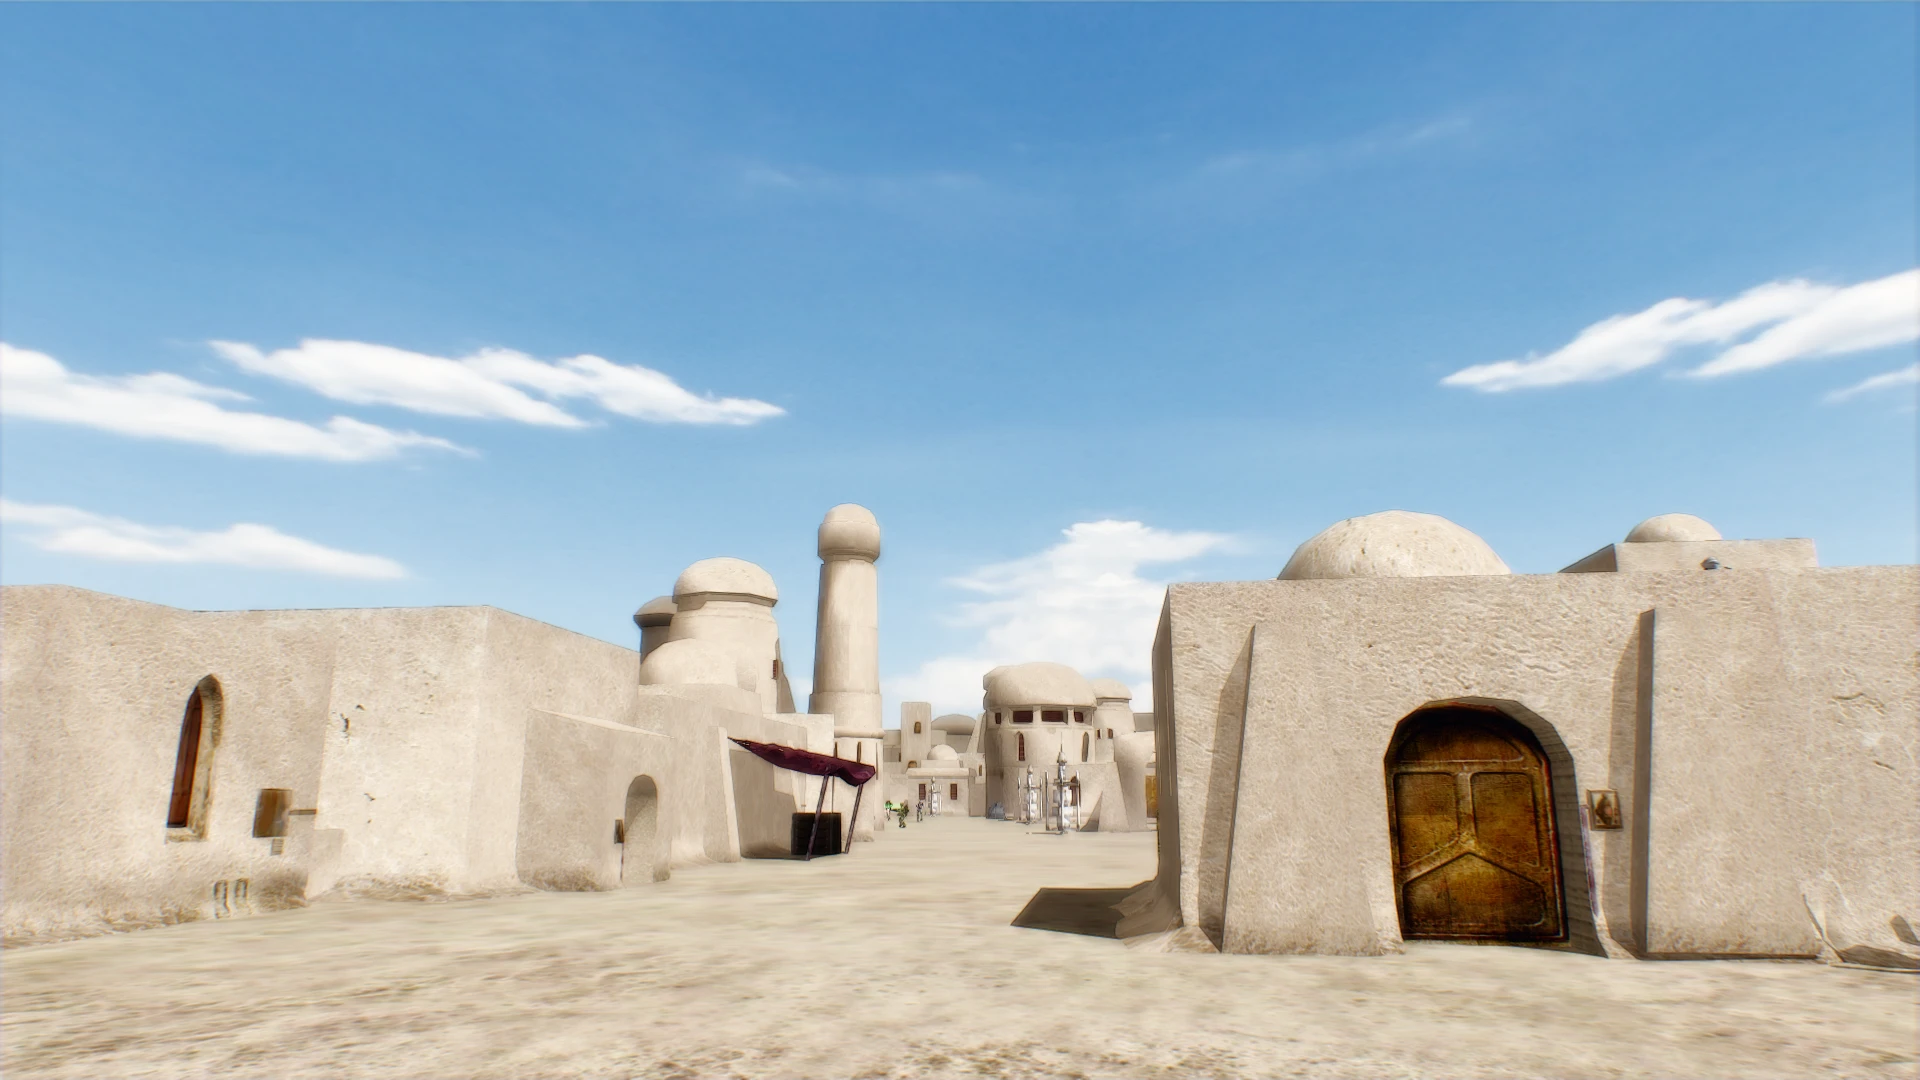 Battlefront 2 Remaster Project by Harrisonfog at Star Wars: Battlefront II  Nexus - Mods and community